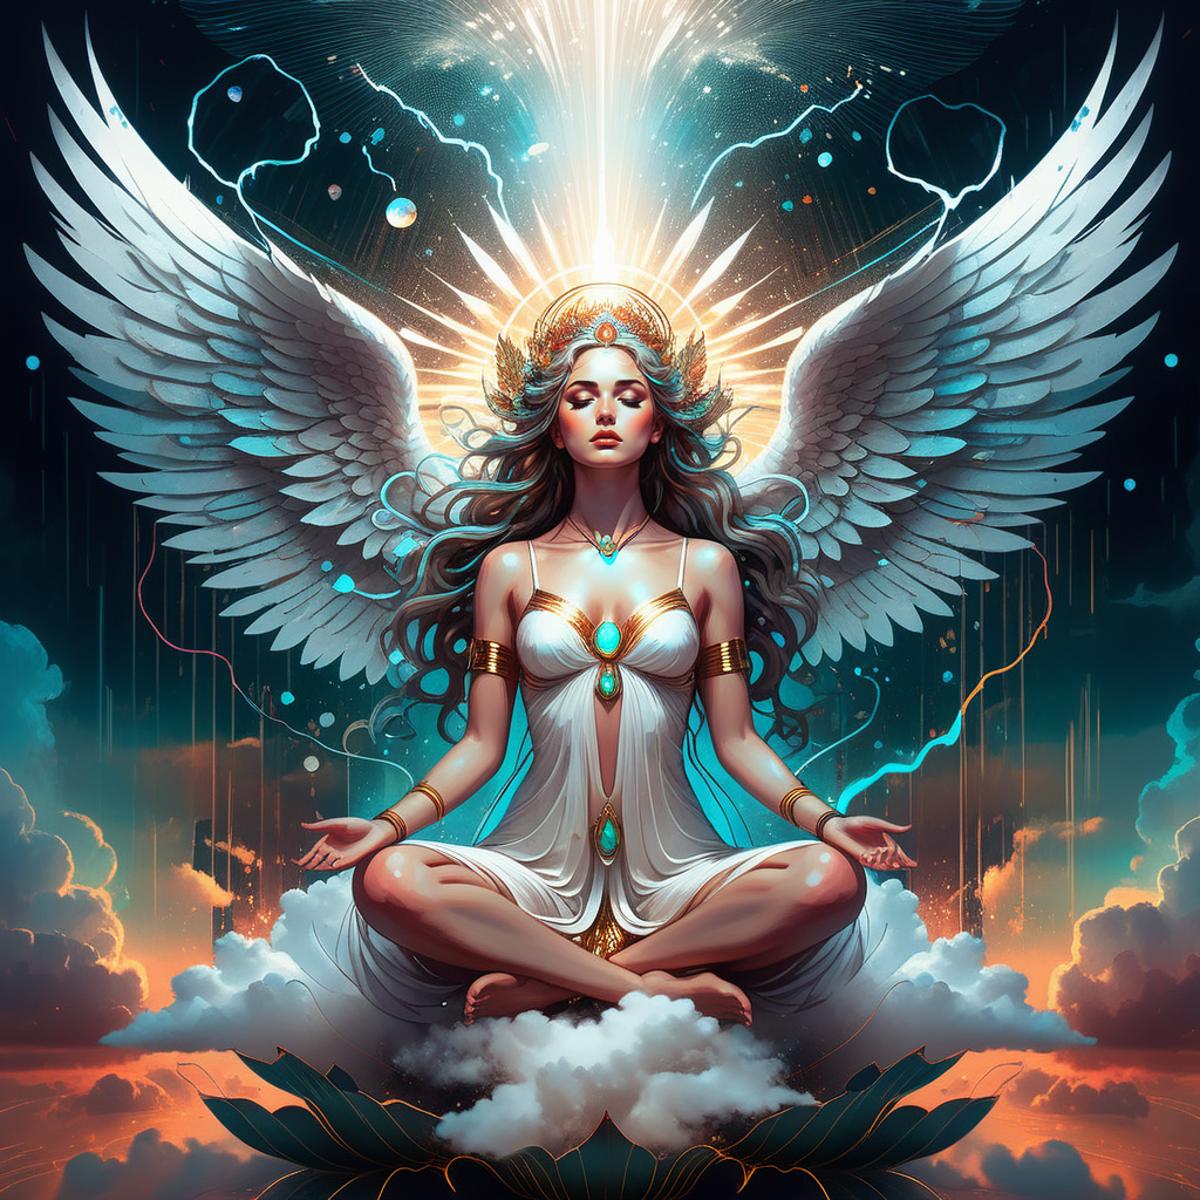 SDXL Angelic/Demonic image by Seryoger